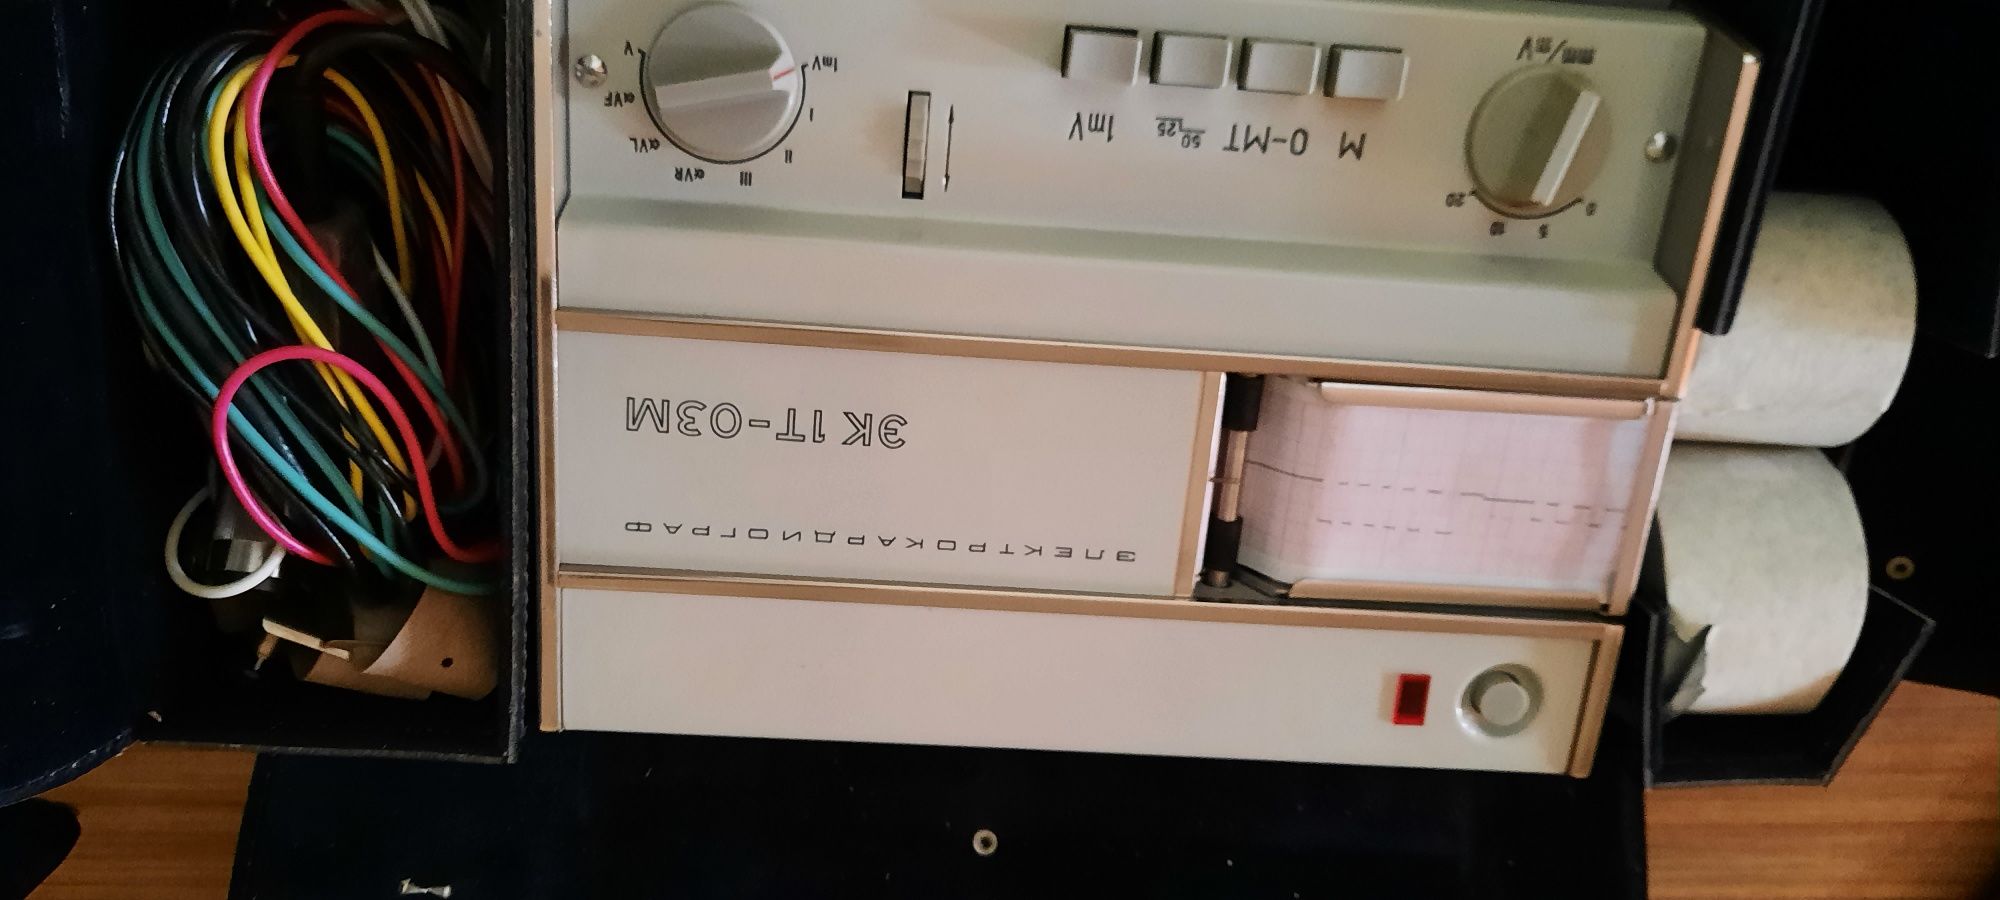 Електрокардоиограф, нов за колекционерска цел ЕК 1 Т 03 М